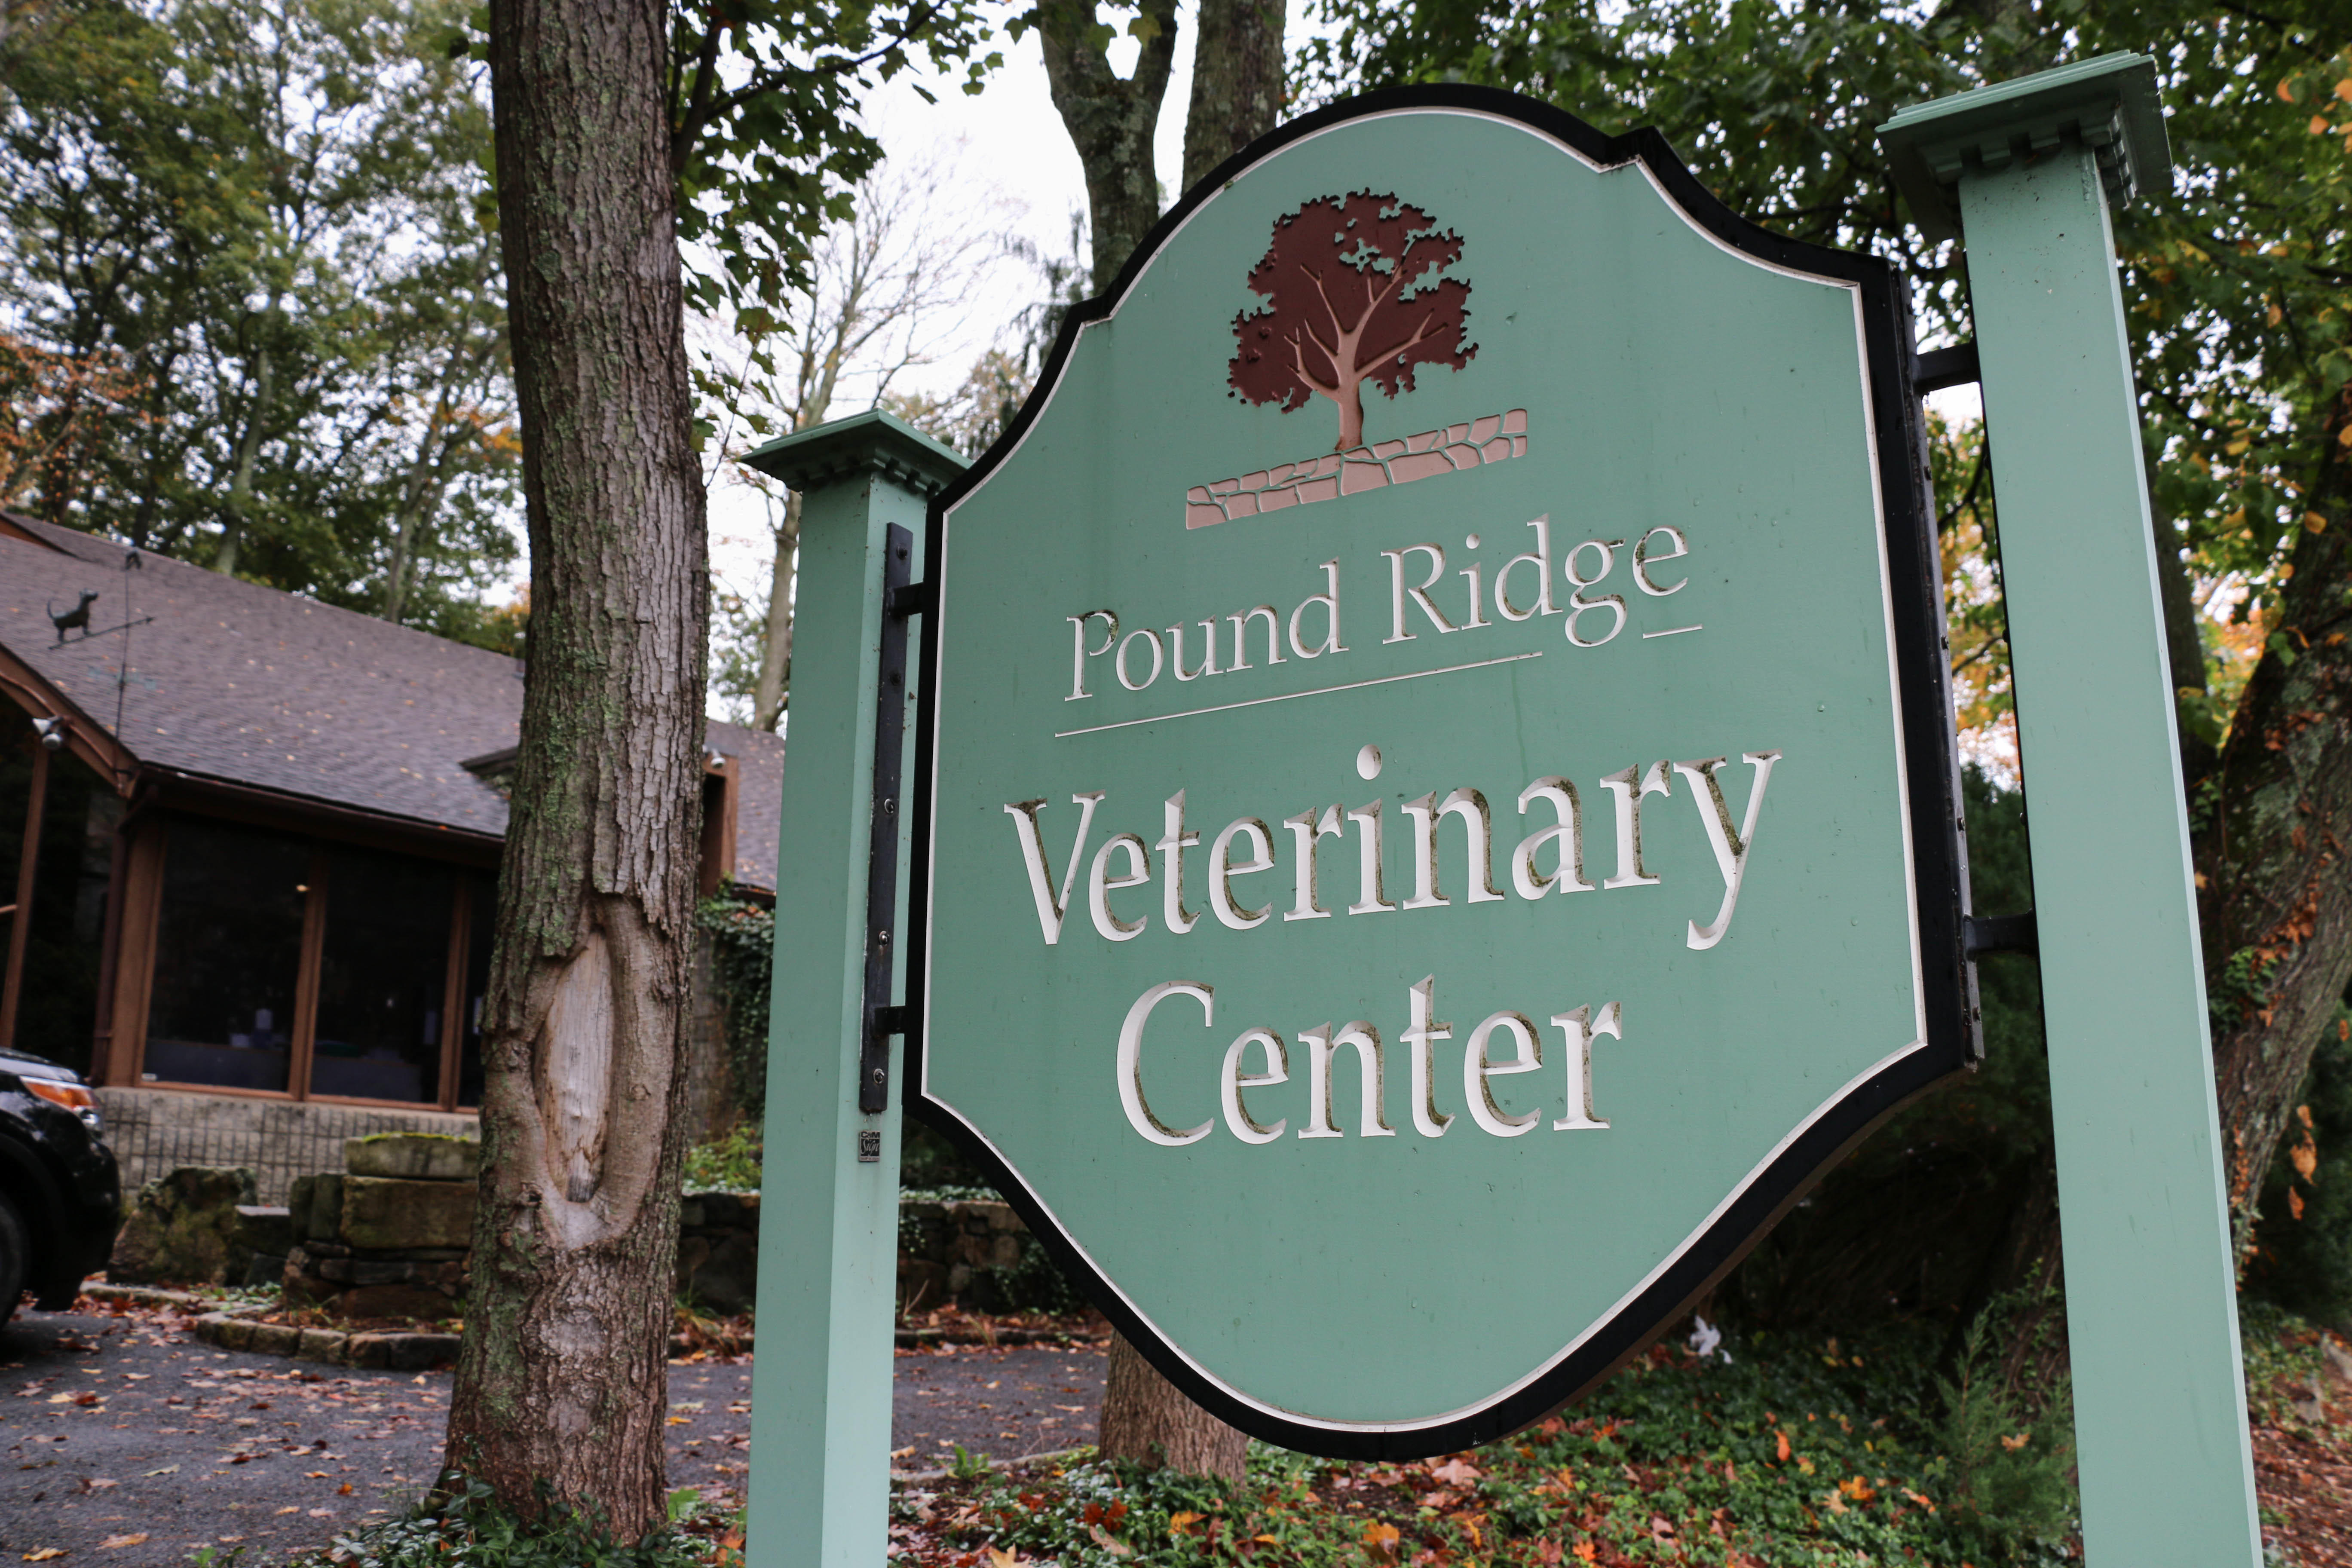 Pound Ridge Veterinary Center Photo